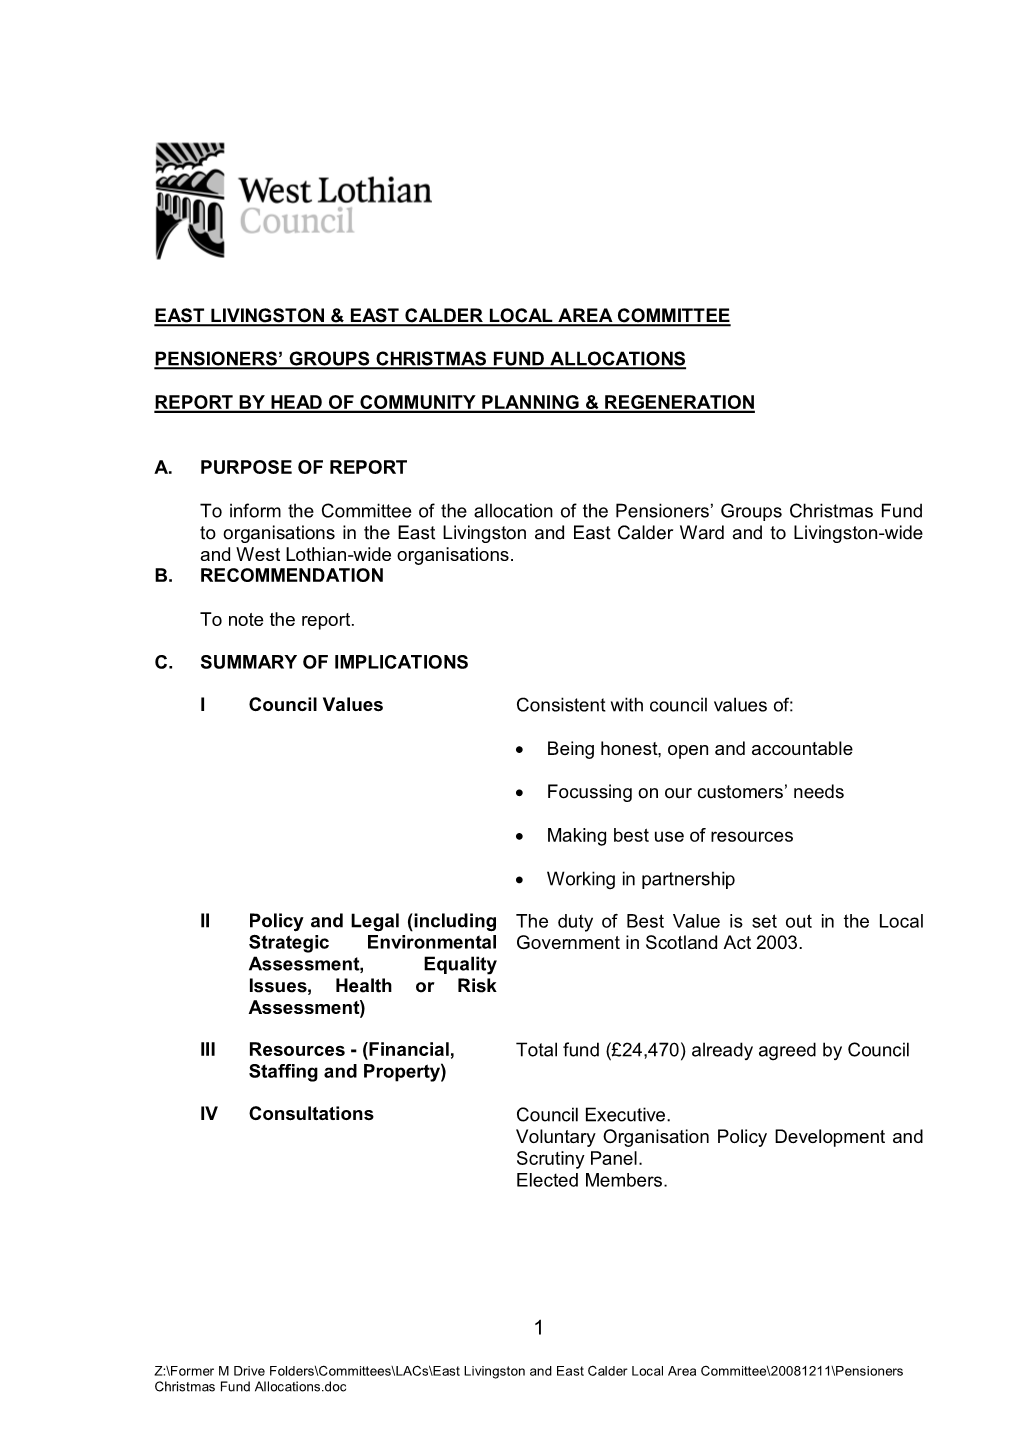 East Livingston & East Calder Local Area Committee